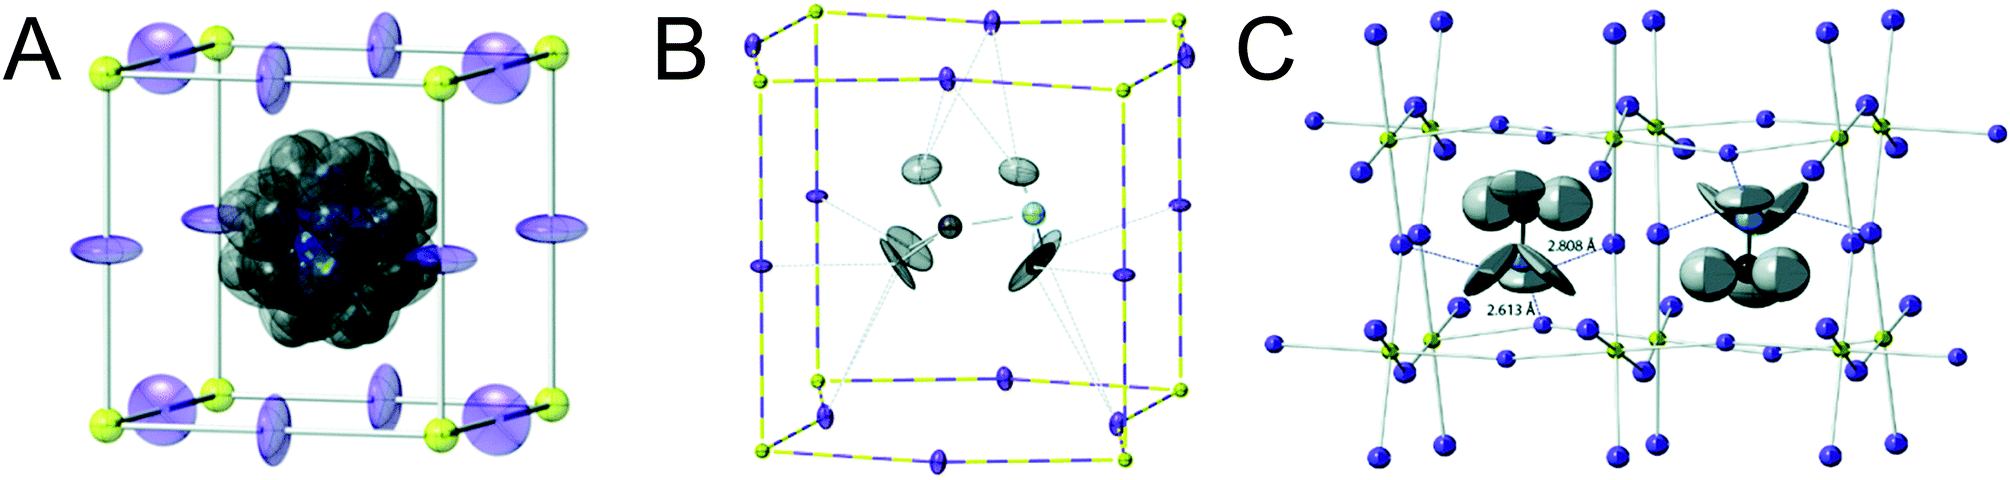 Polymorphism in metal halide perovskites - Materials Advances (RSC ...